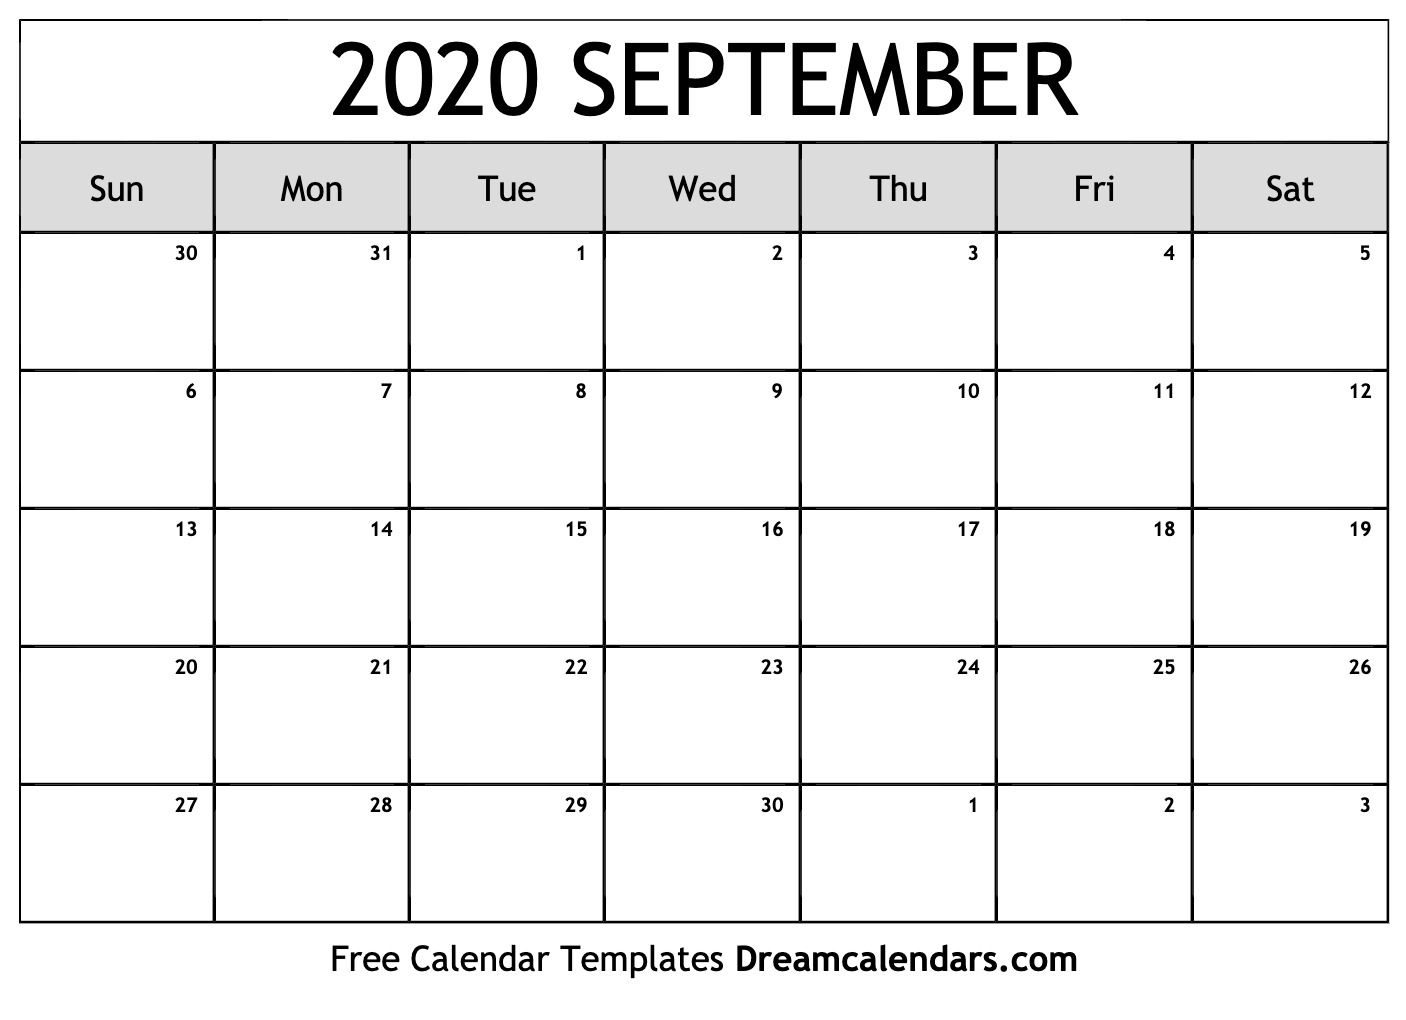 September 2020 Calendar Wallpapers - Top Free September 2020